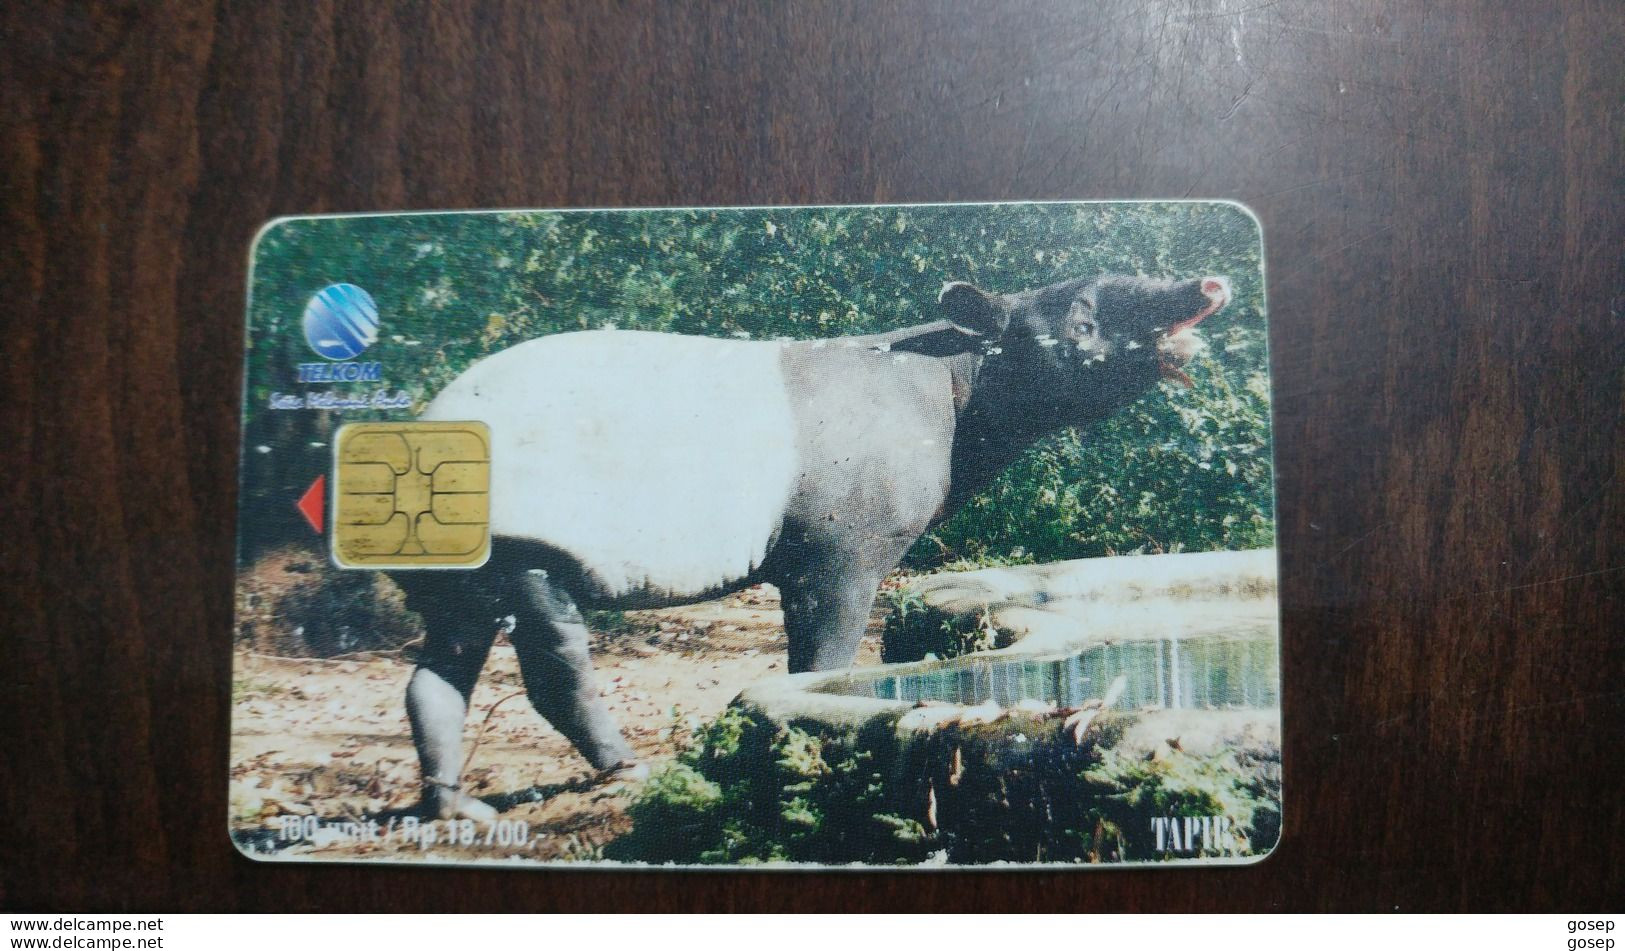 Indonesia-(ID-TLK-SS-0068)-TAPIR(6)-(rp.18.700)-(100units)used Card - Indonésie